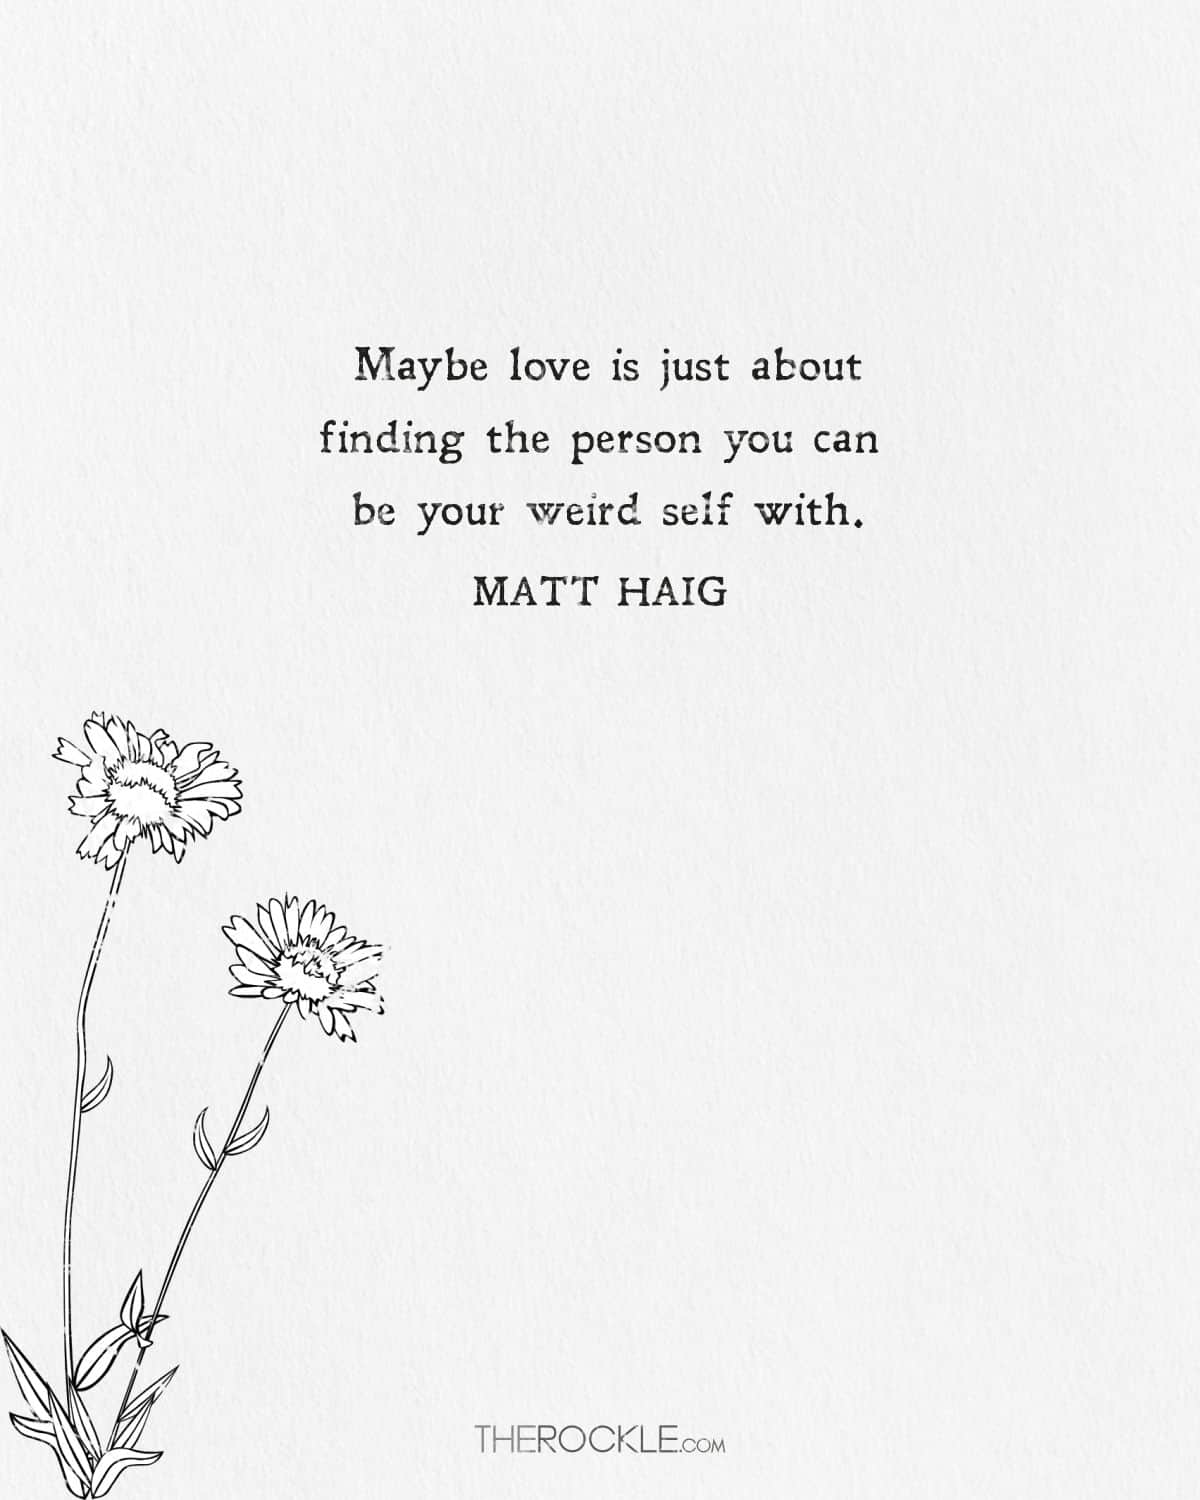 Matt Haig quote